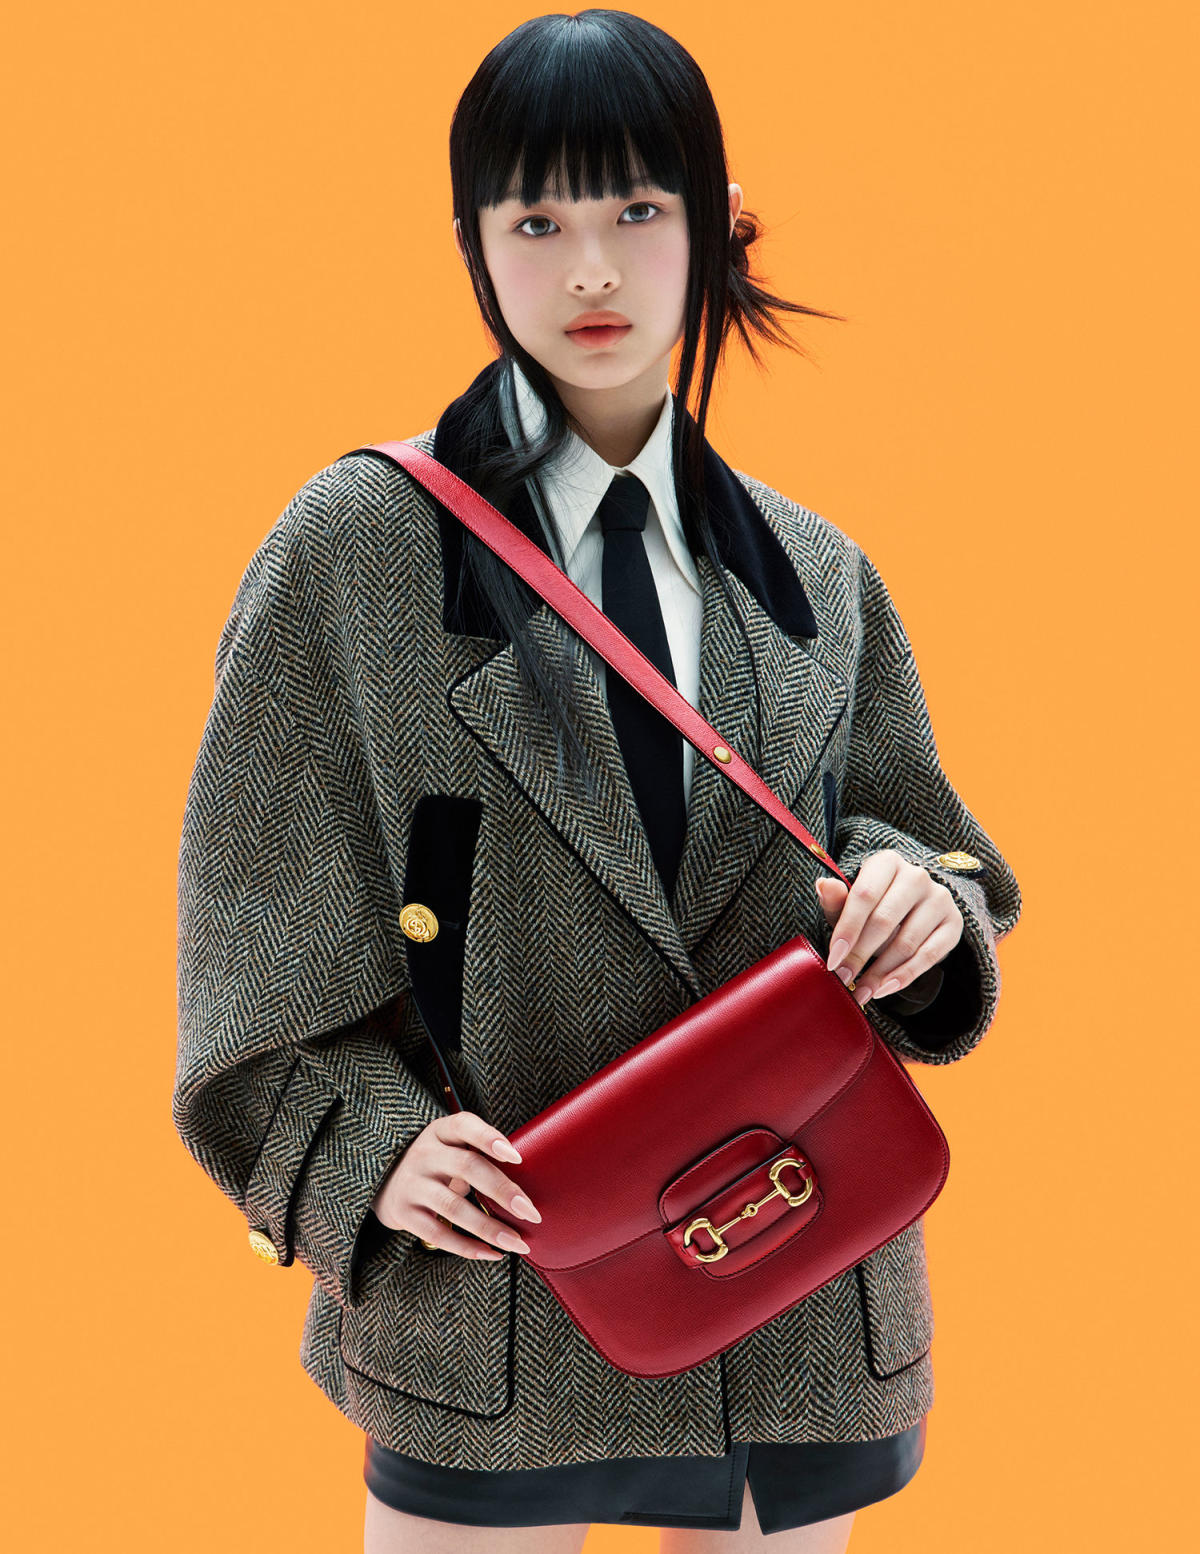 Meet your match. The Louis Vuitton Twist handbag is reimagined